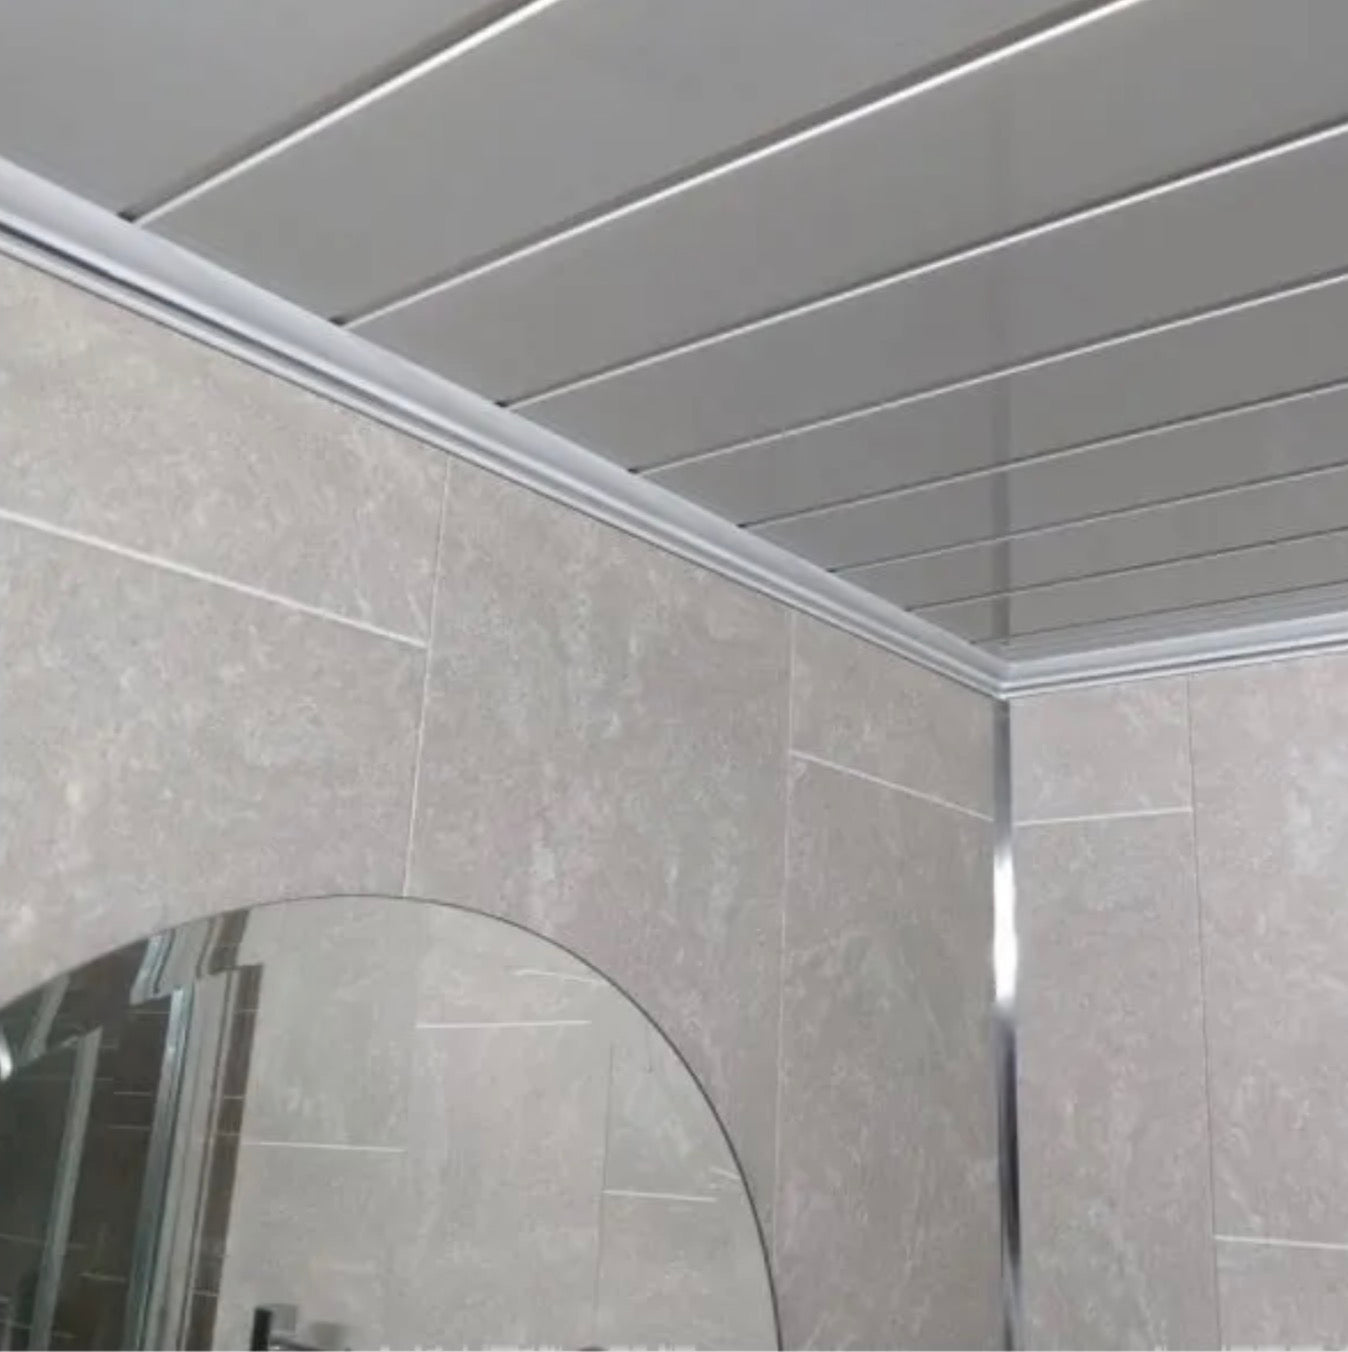 Ceiling Cornice Trim - White With Chrome Strip